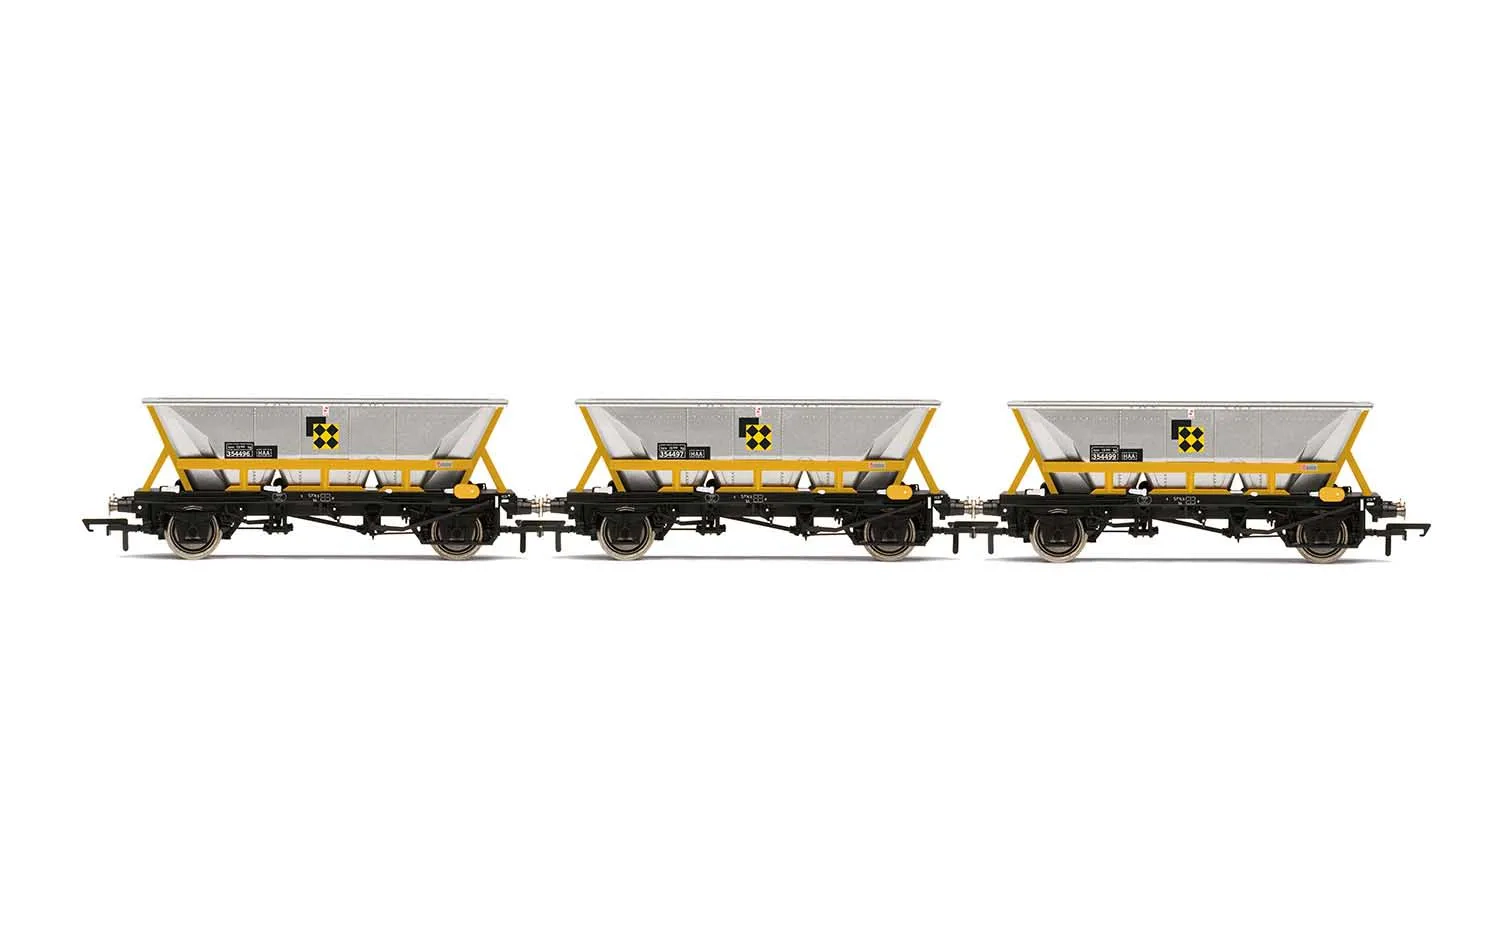 HAA Hopper Wagons, Three Pack, BR Coal Sector - Era 8